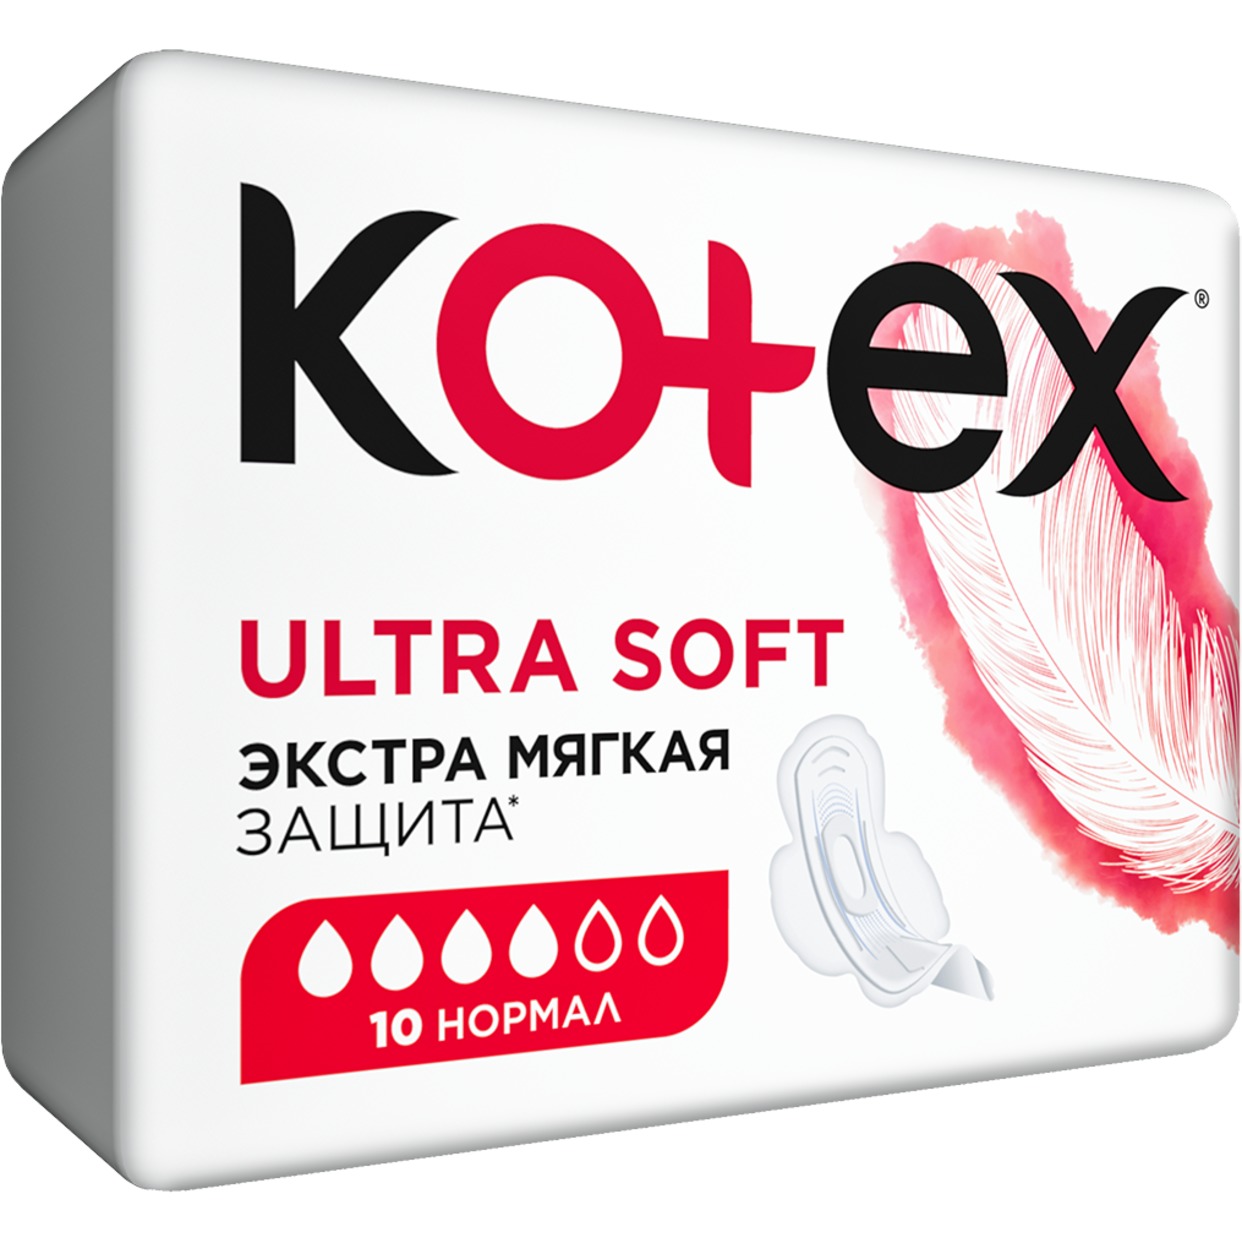 Прокладки Kotex Ultra Soft Нормал 10 шт. по акции в Пятерочке